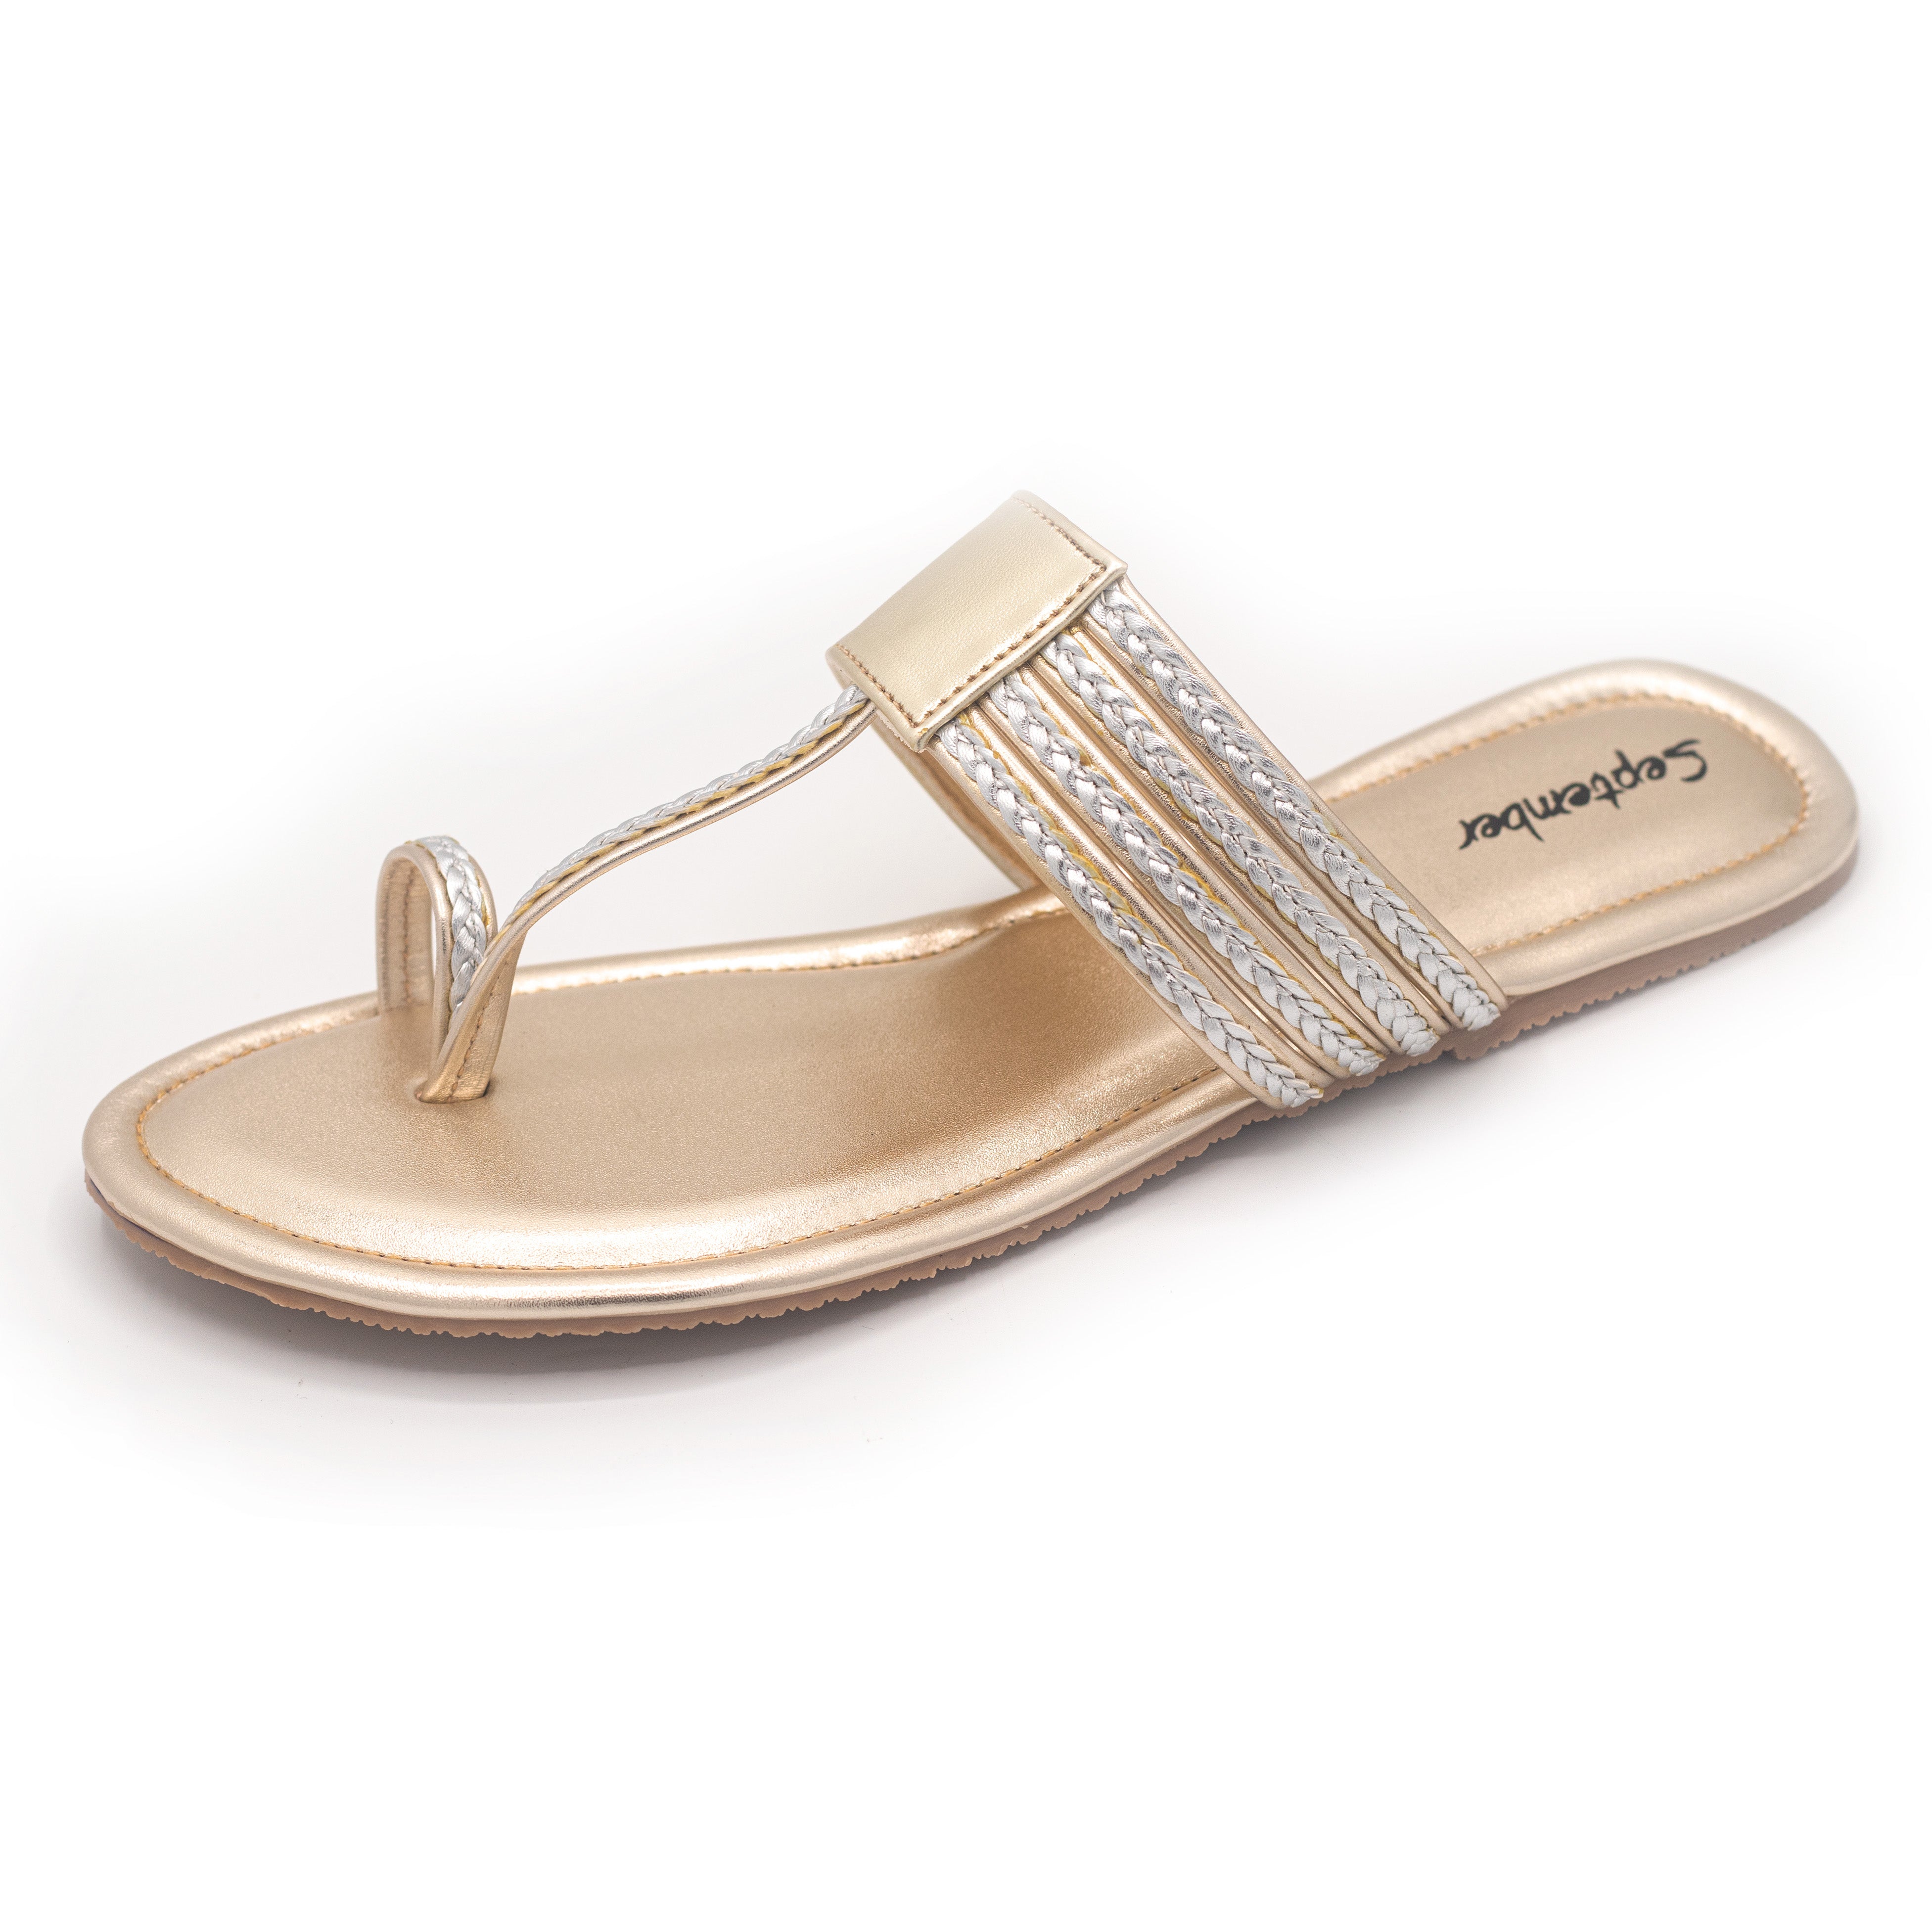 Golden Glitter Bridal Sandals Open Toe Wedge Heels Ankle Strap Sandals |FSJshoes